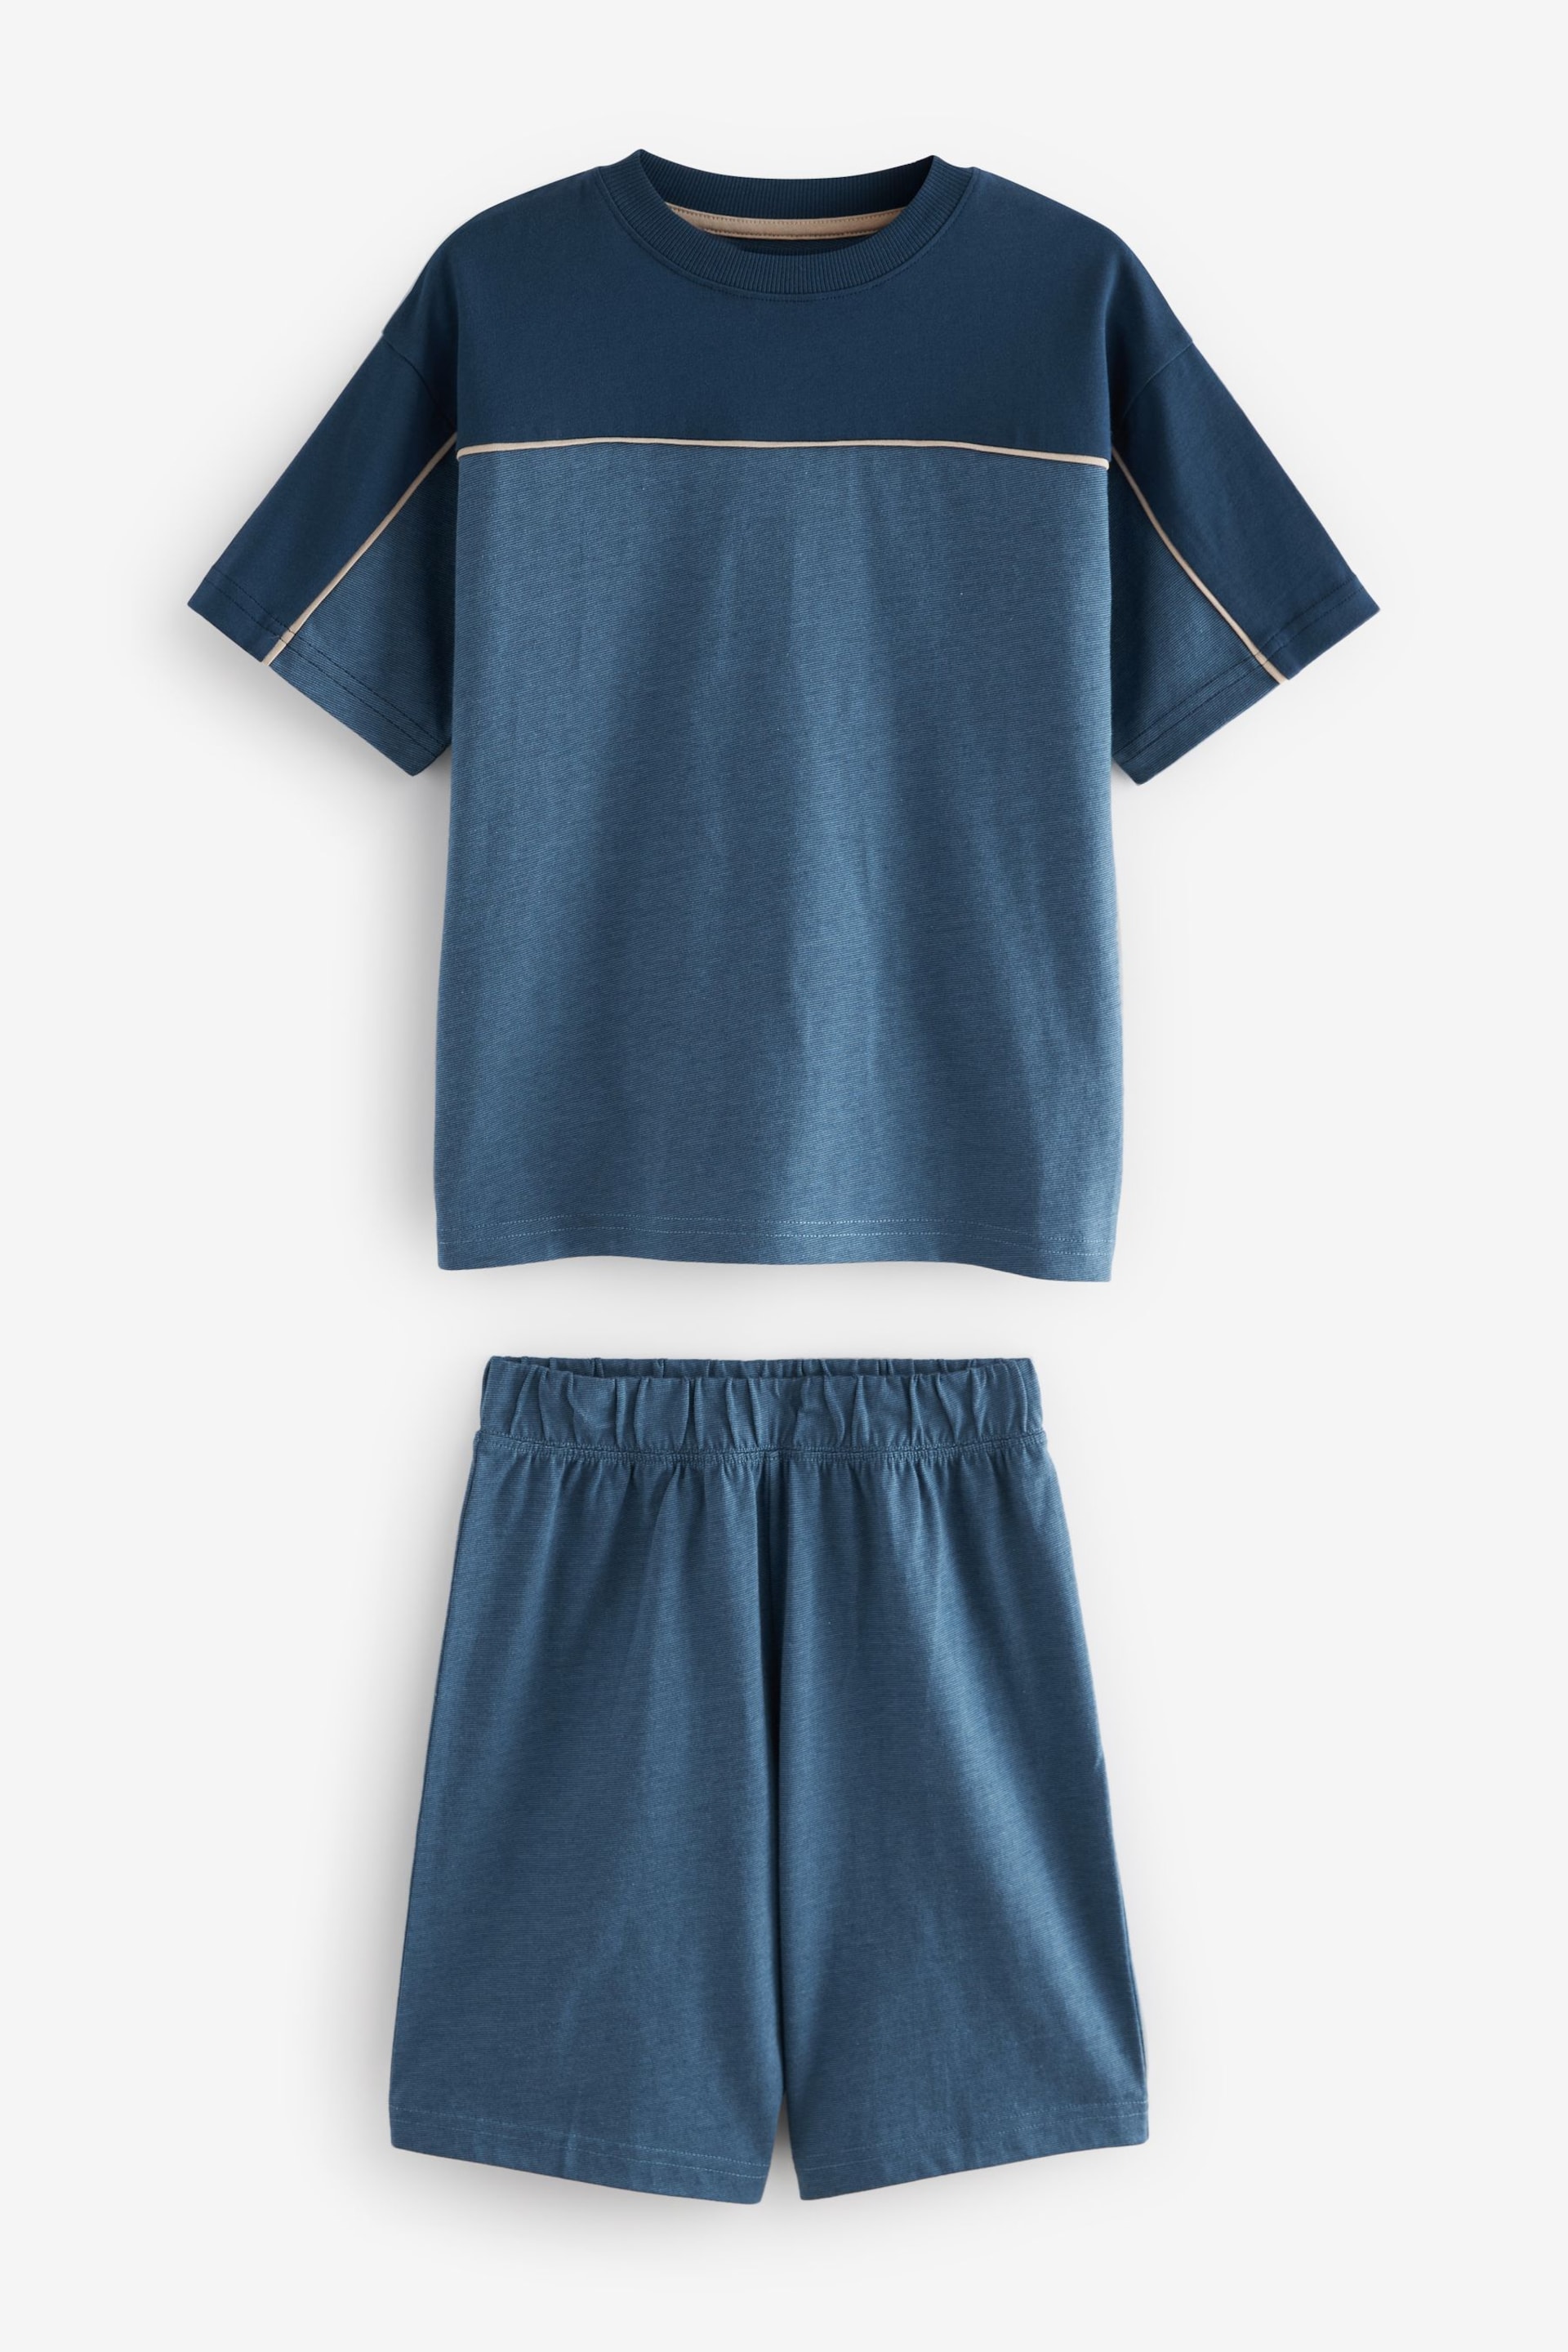 Blue Short Pyjamas 3 Pack (1.5-16yrs) - Image 6 of 9